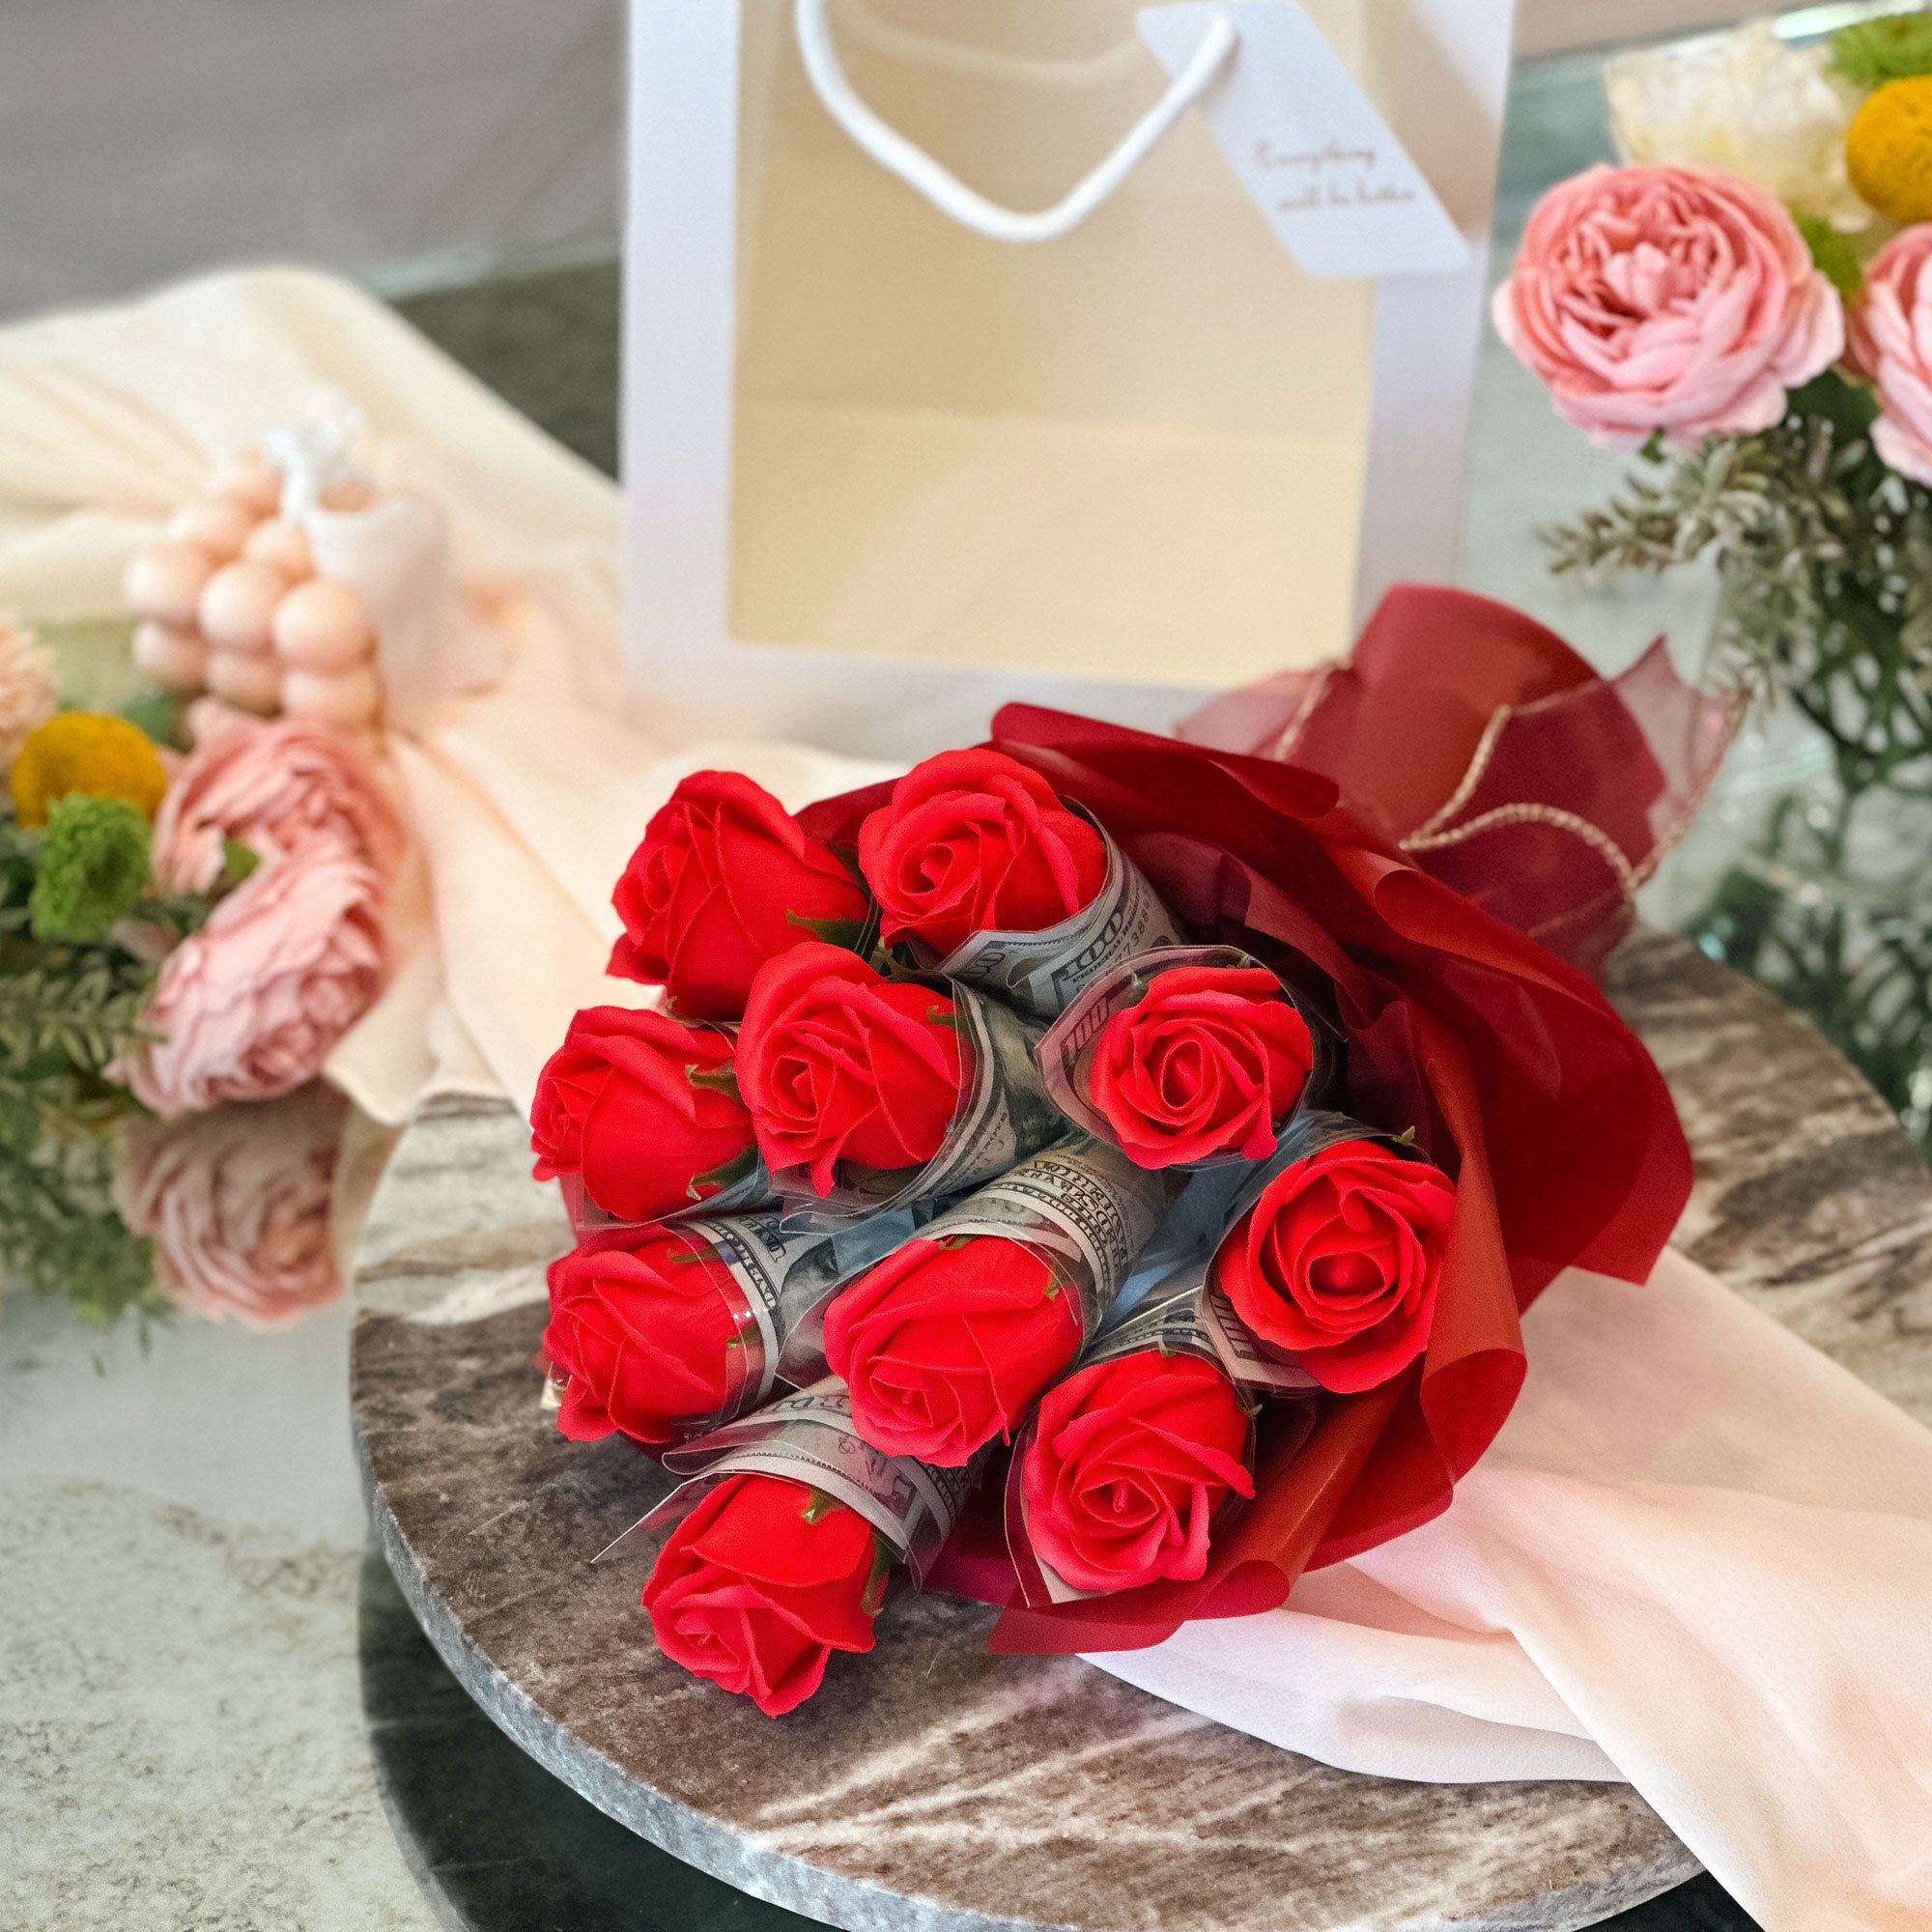 Gift box and fresh flowers · Free Stock Photo